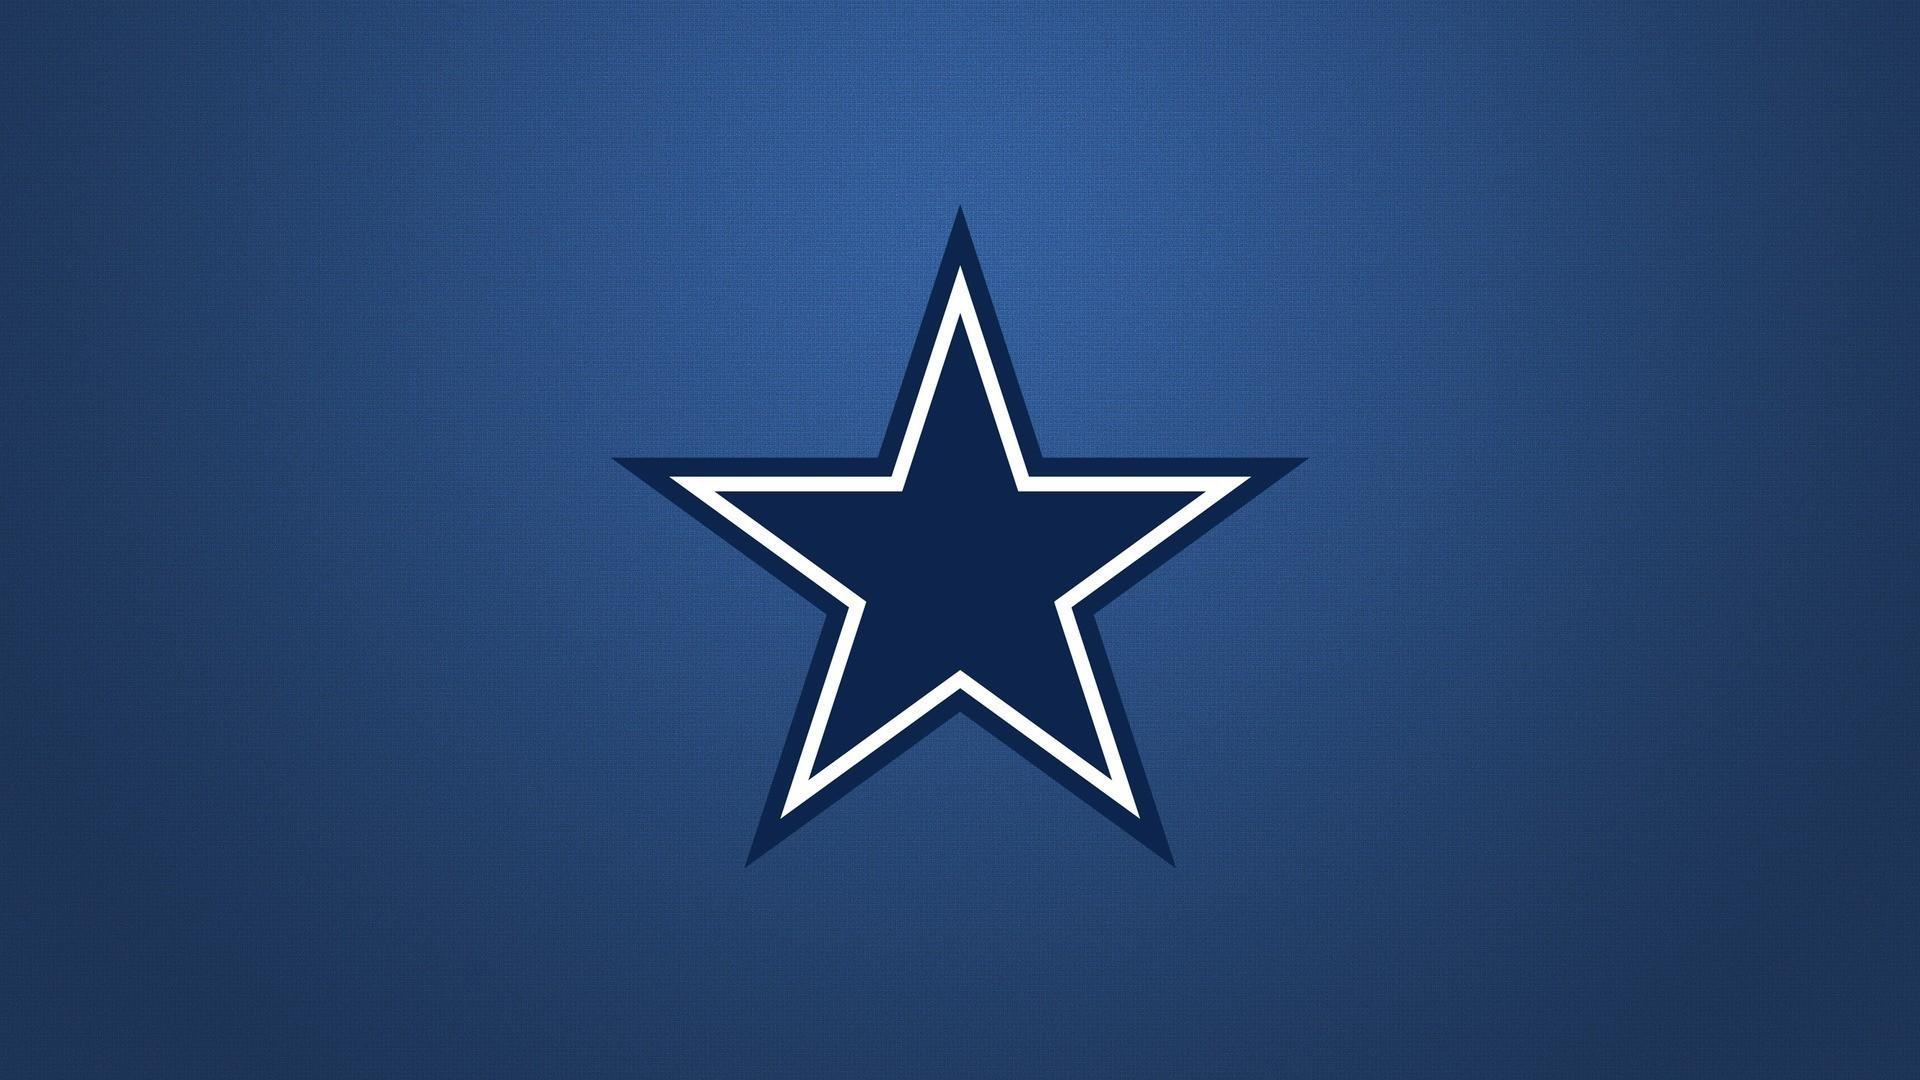 Dallas Cowboys Wallpaper for iPhone